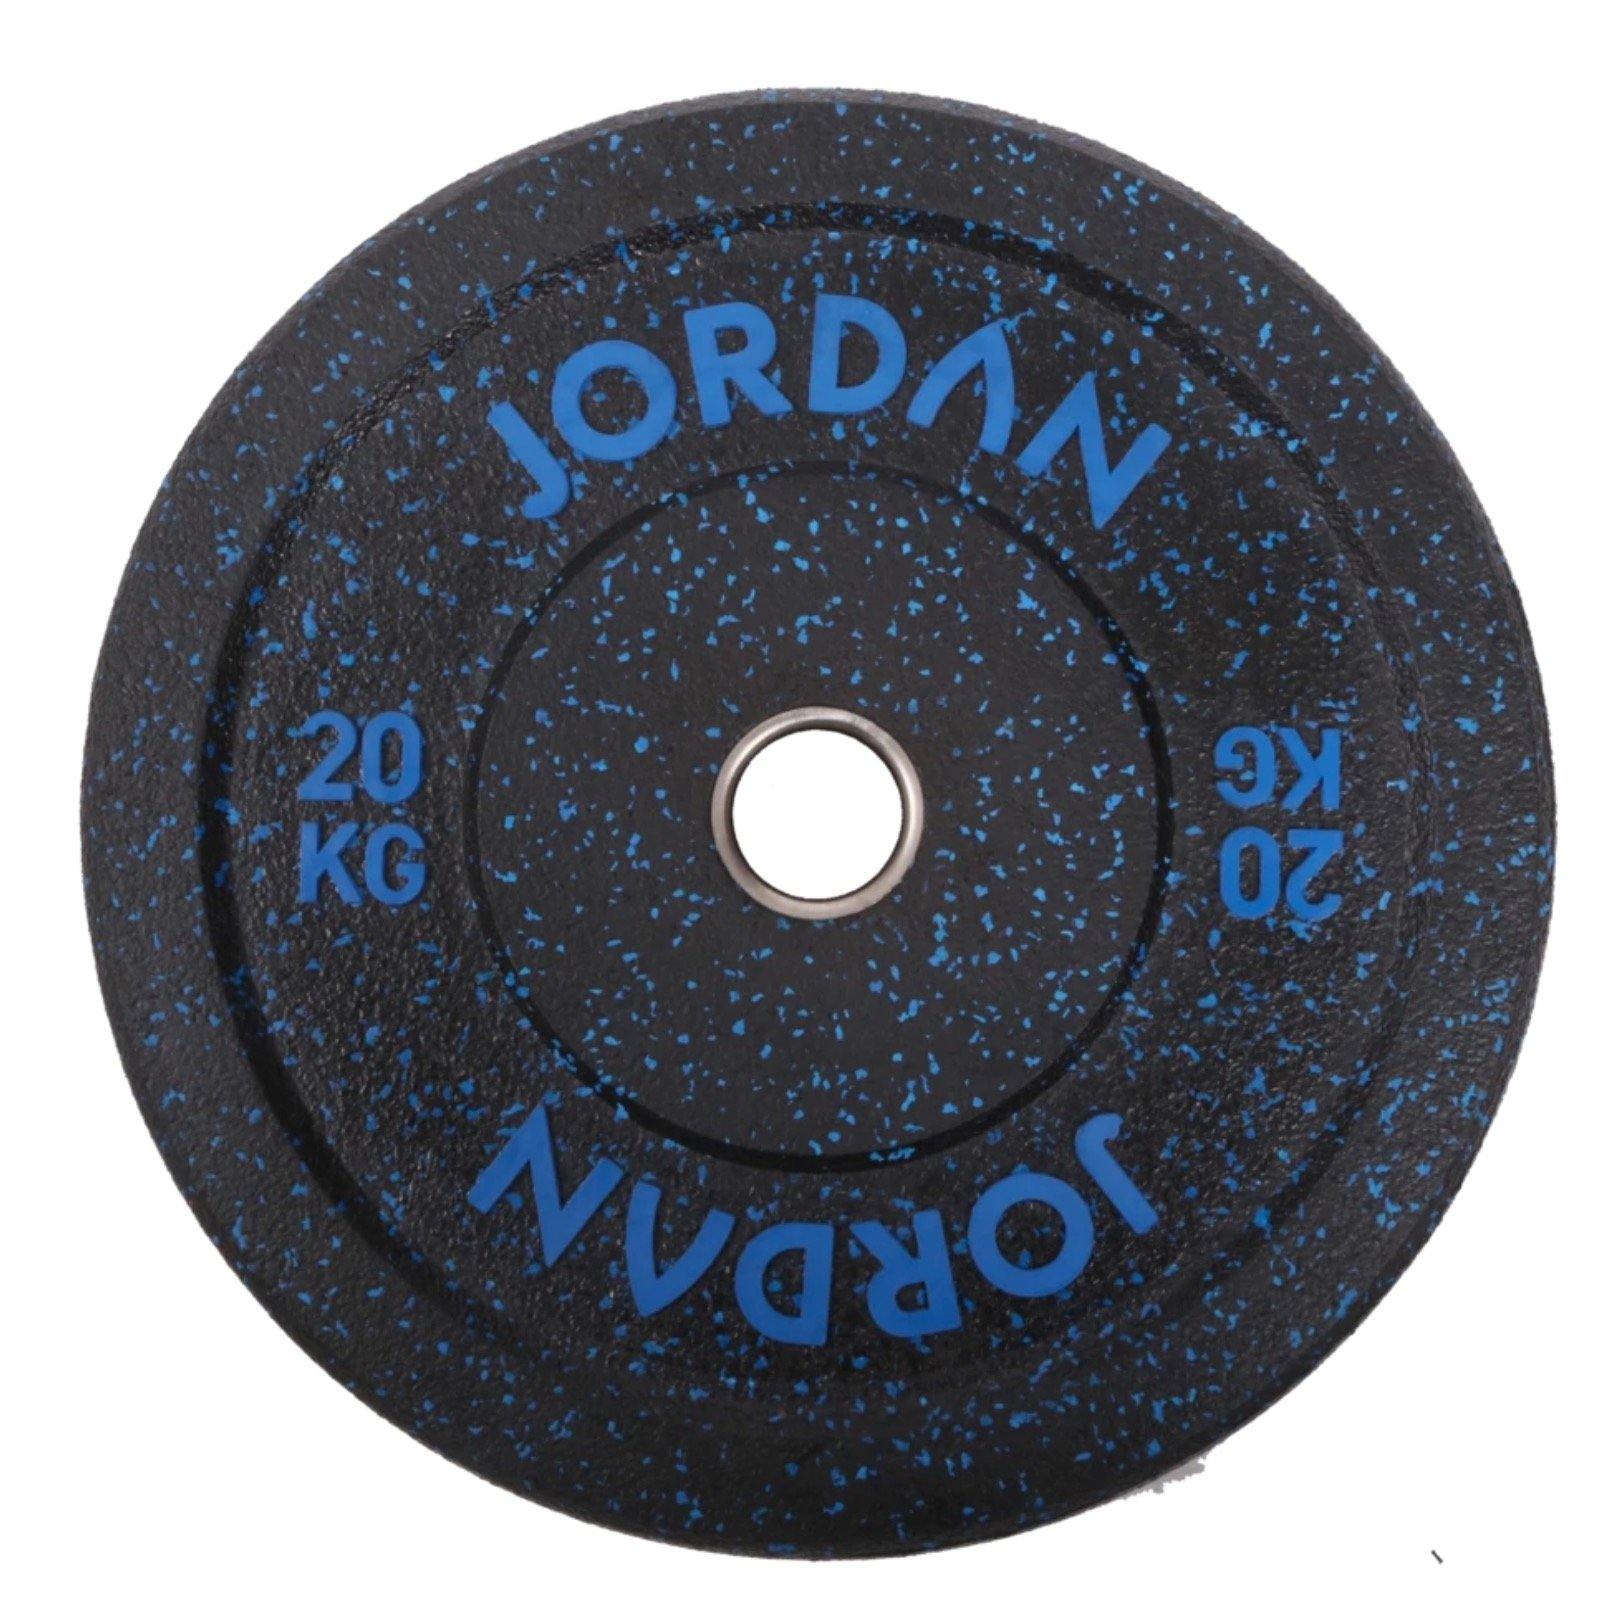 Jordan HG Black Rubber Bumper Plate - Coloured Fleck - 150kg Set